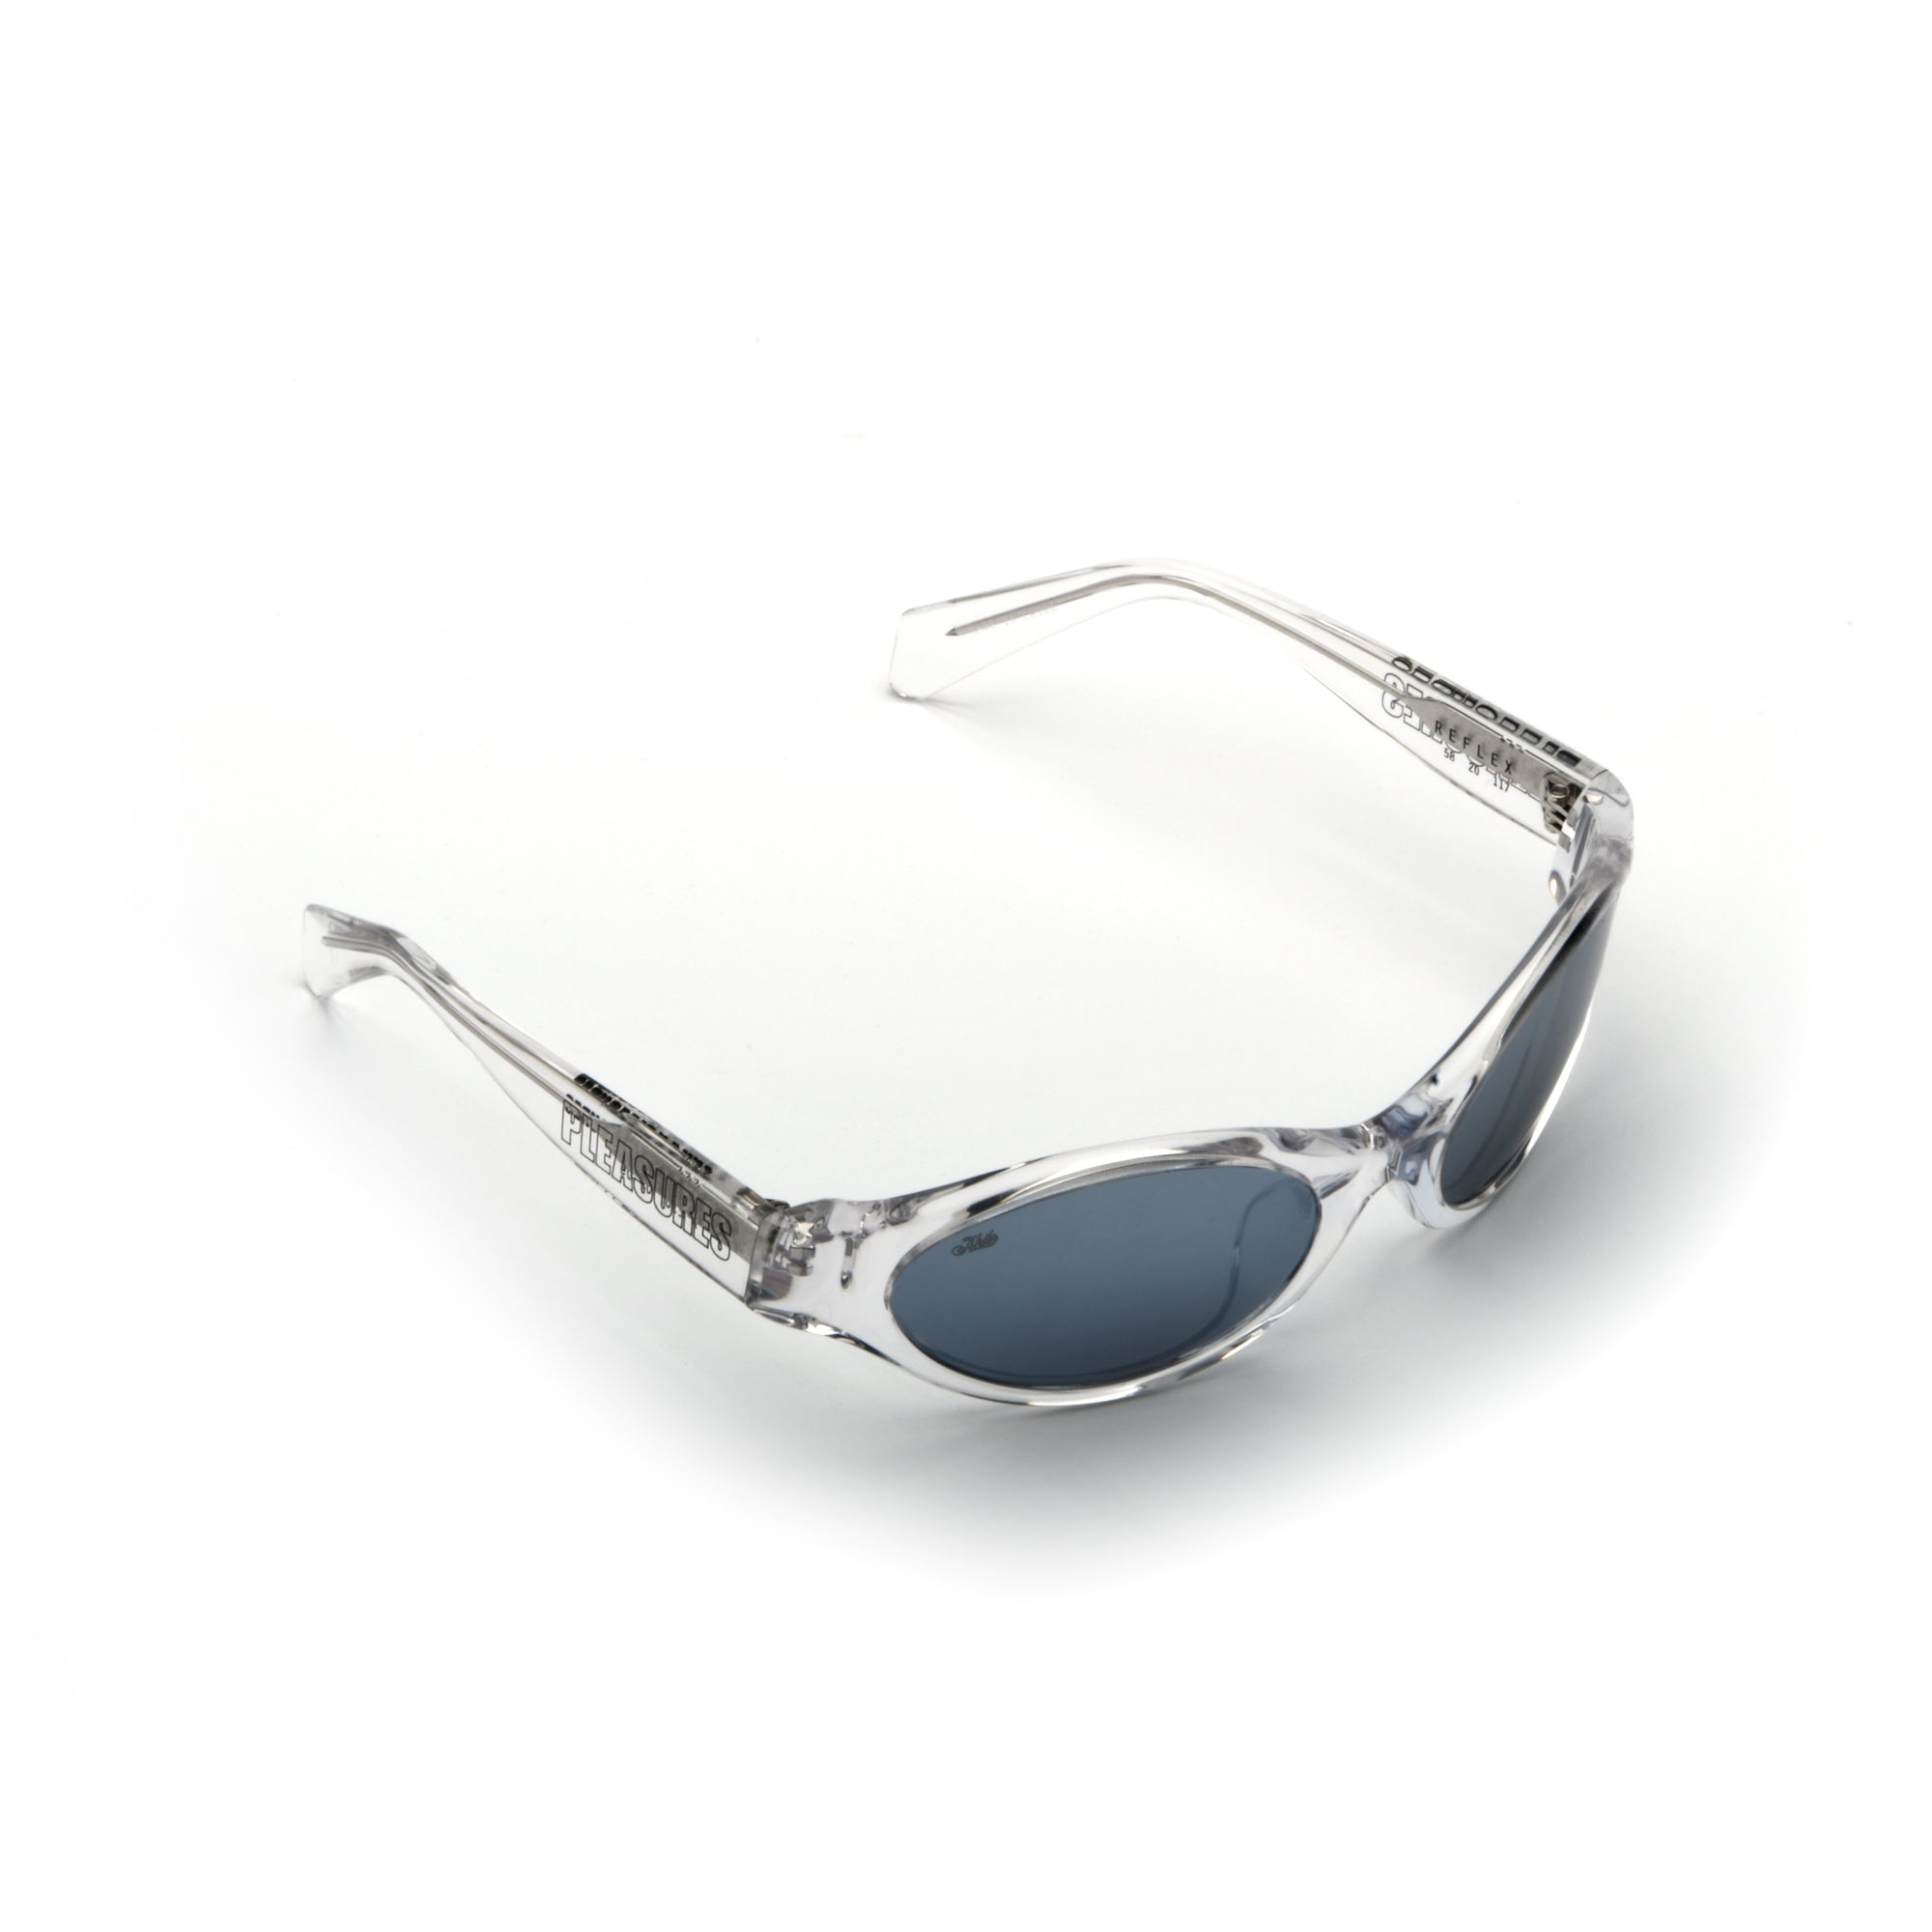 Best Deals on HD Vision Premium Sunglasses Online in India